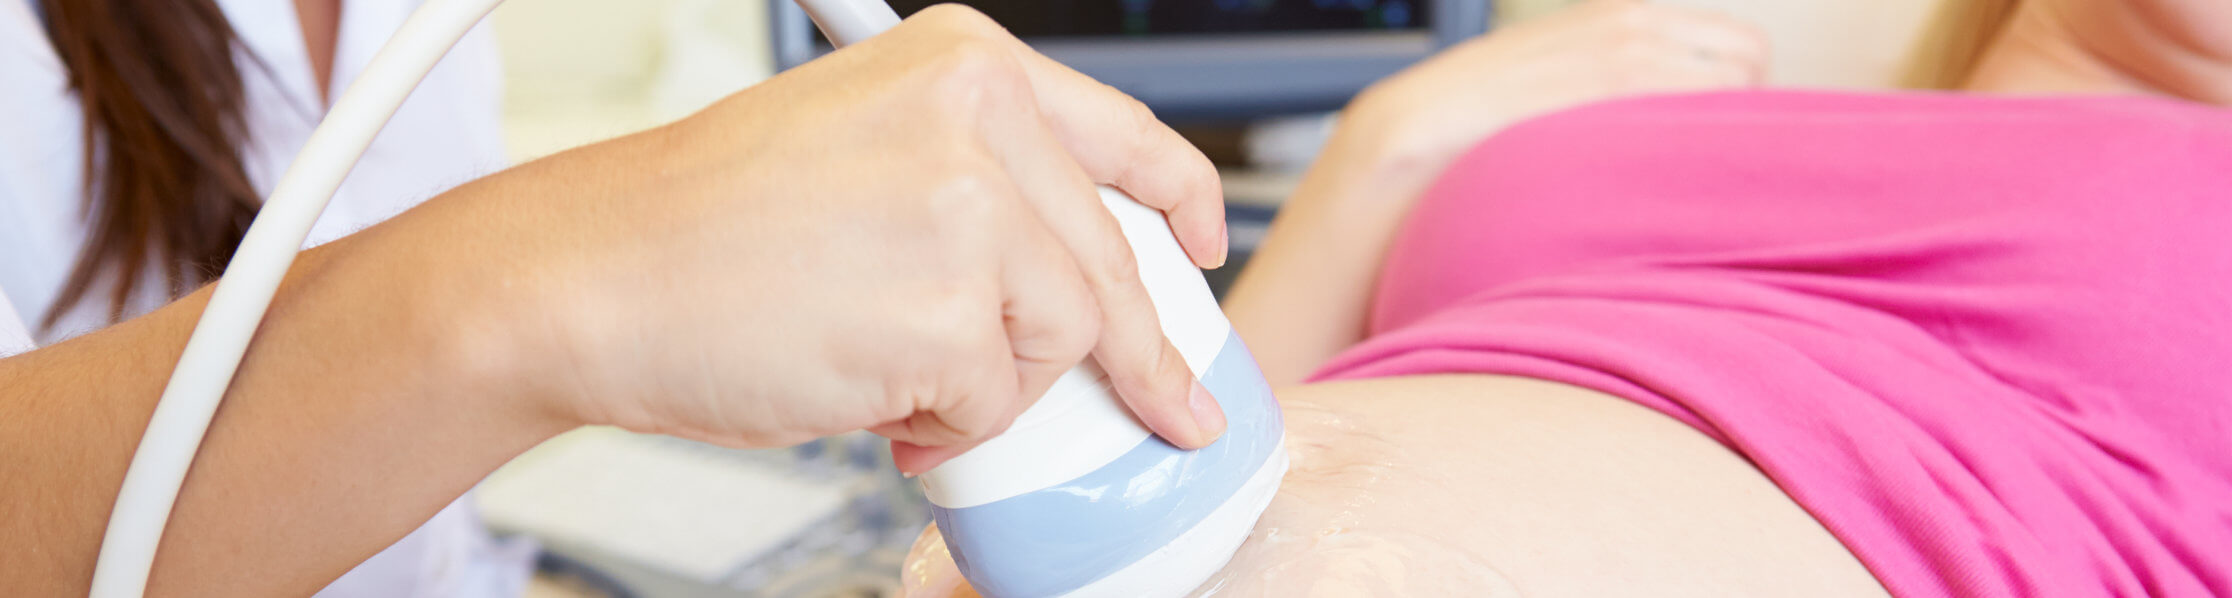 a woman's belly receiving ultrasound